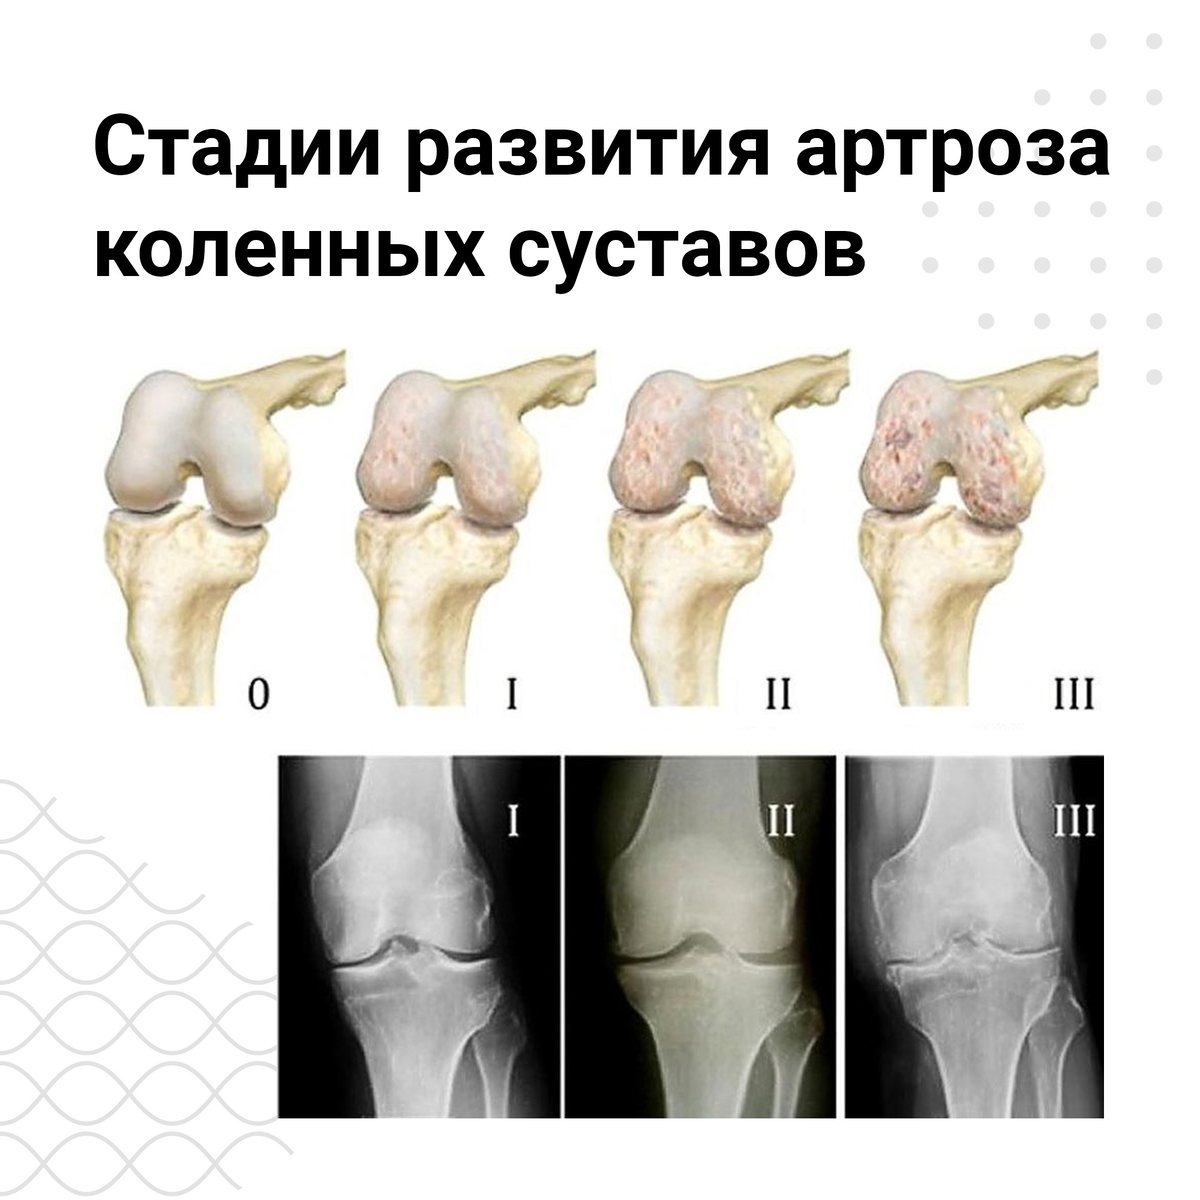 Остеоартроз 1 2 степени коленного сустава. Гонартроз коленного сустава 2. Деформирующий остеоартроз коленного сустава. Доа коленного сустава 2 степени.